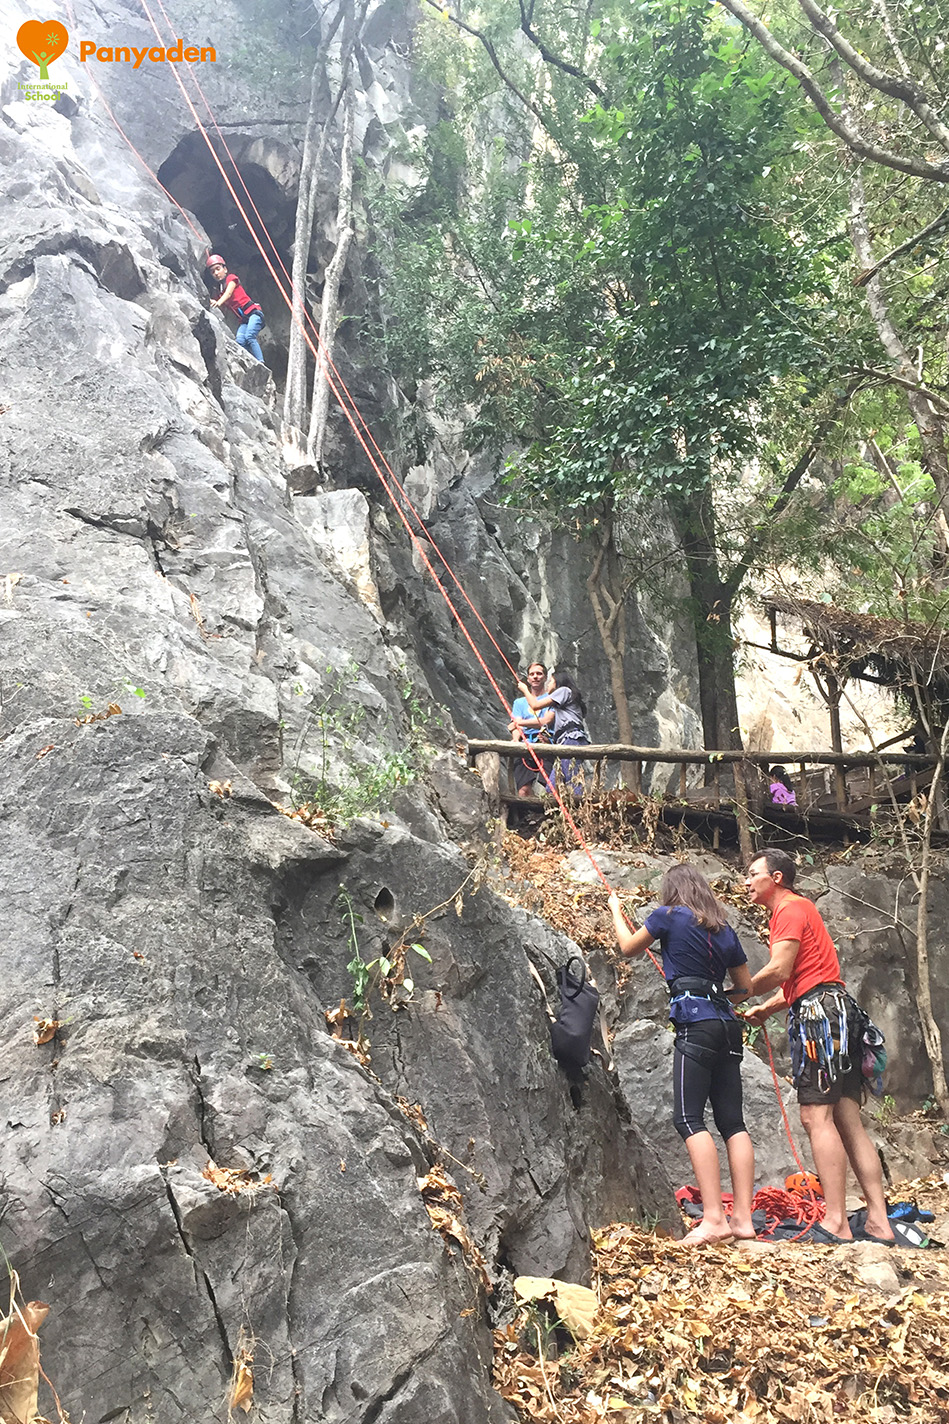 Panyaden Y7 rock climbing - student gets ready to climb